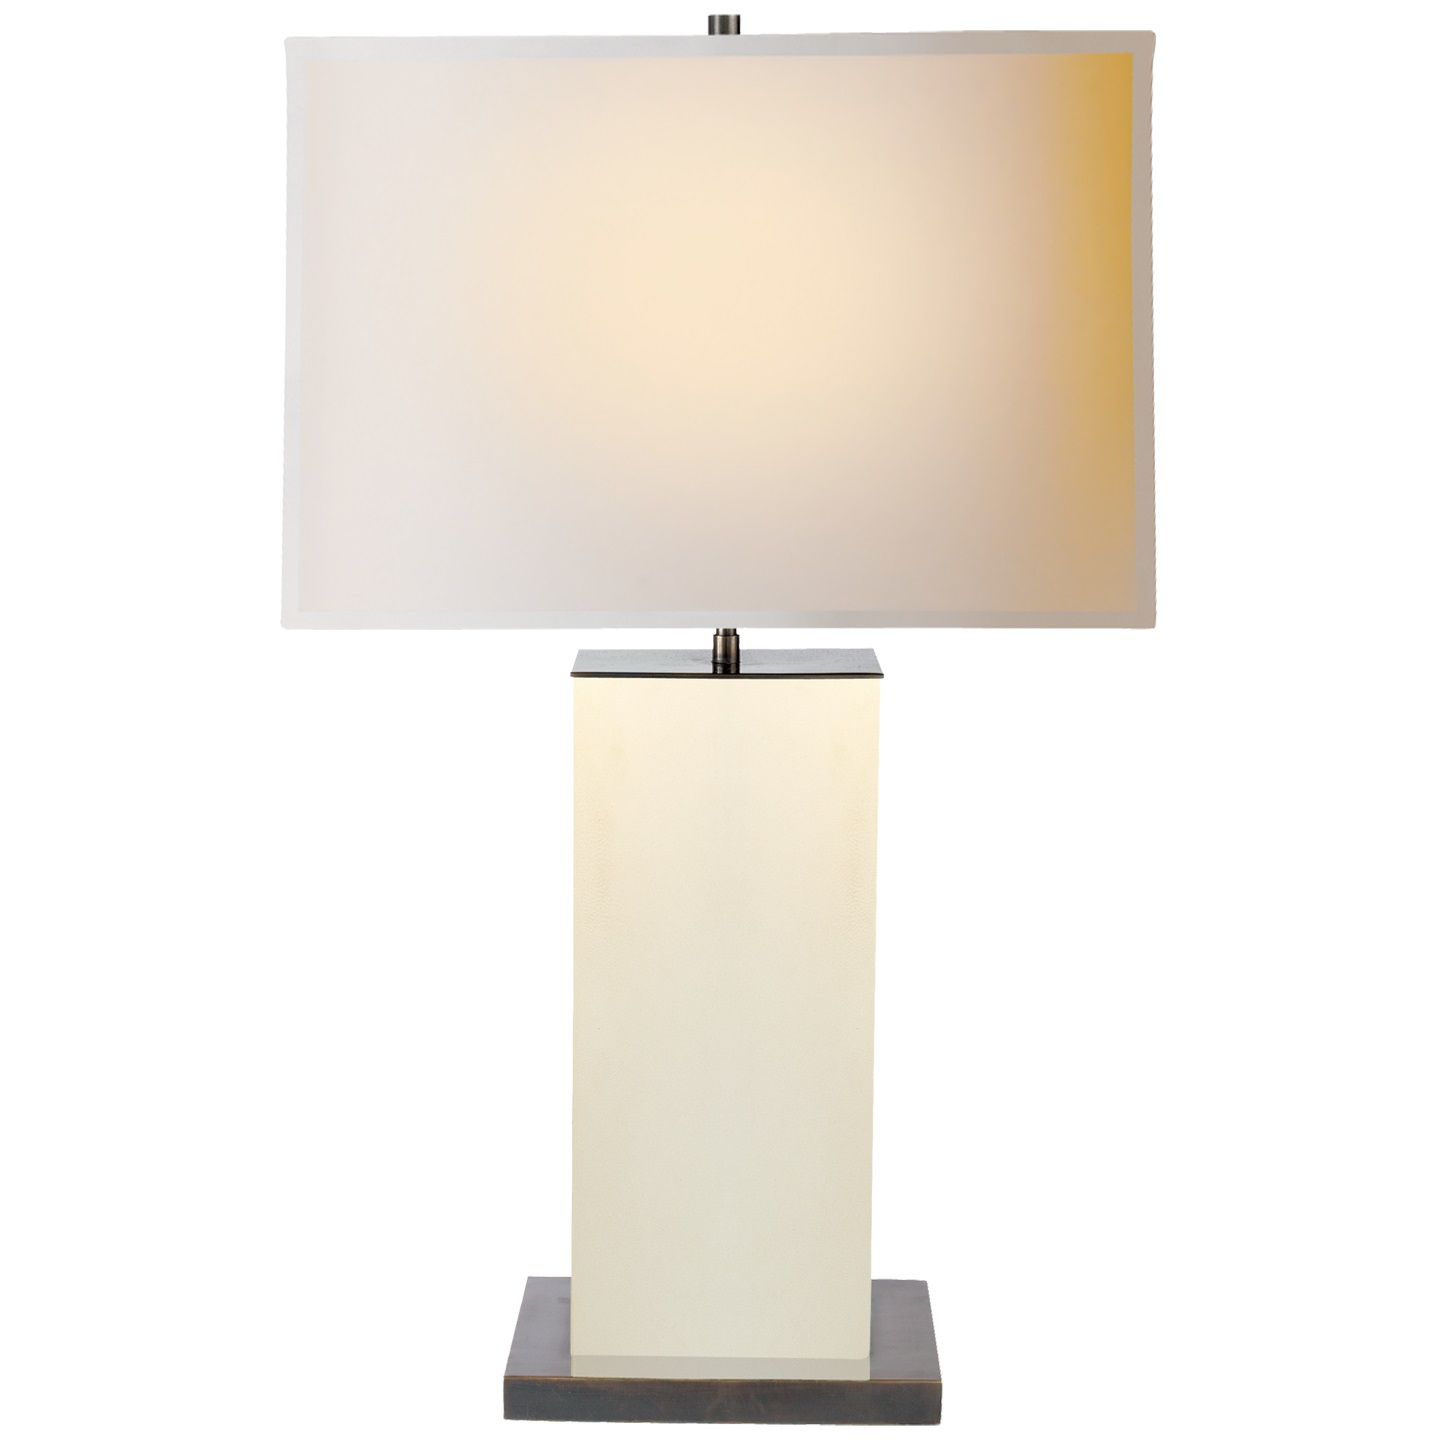 Dixon Tall Table Lamp